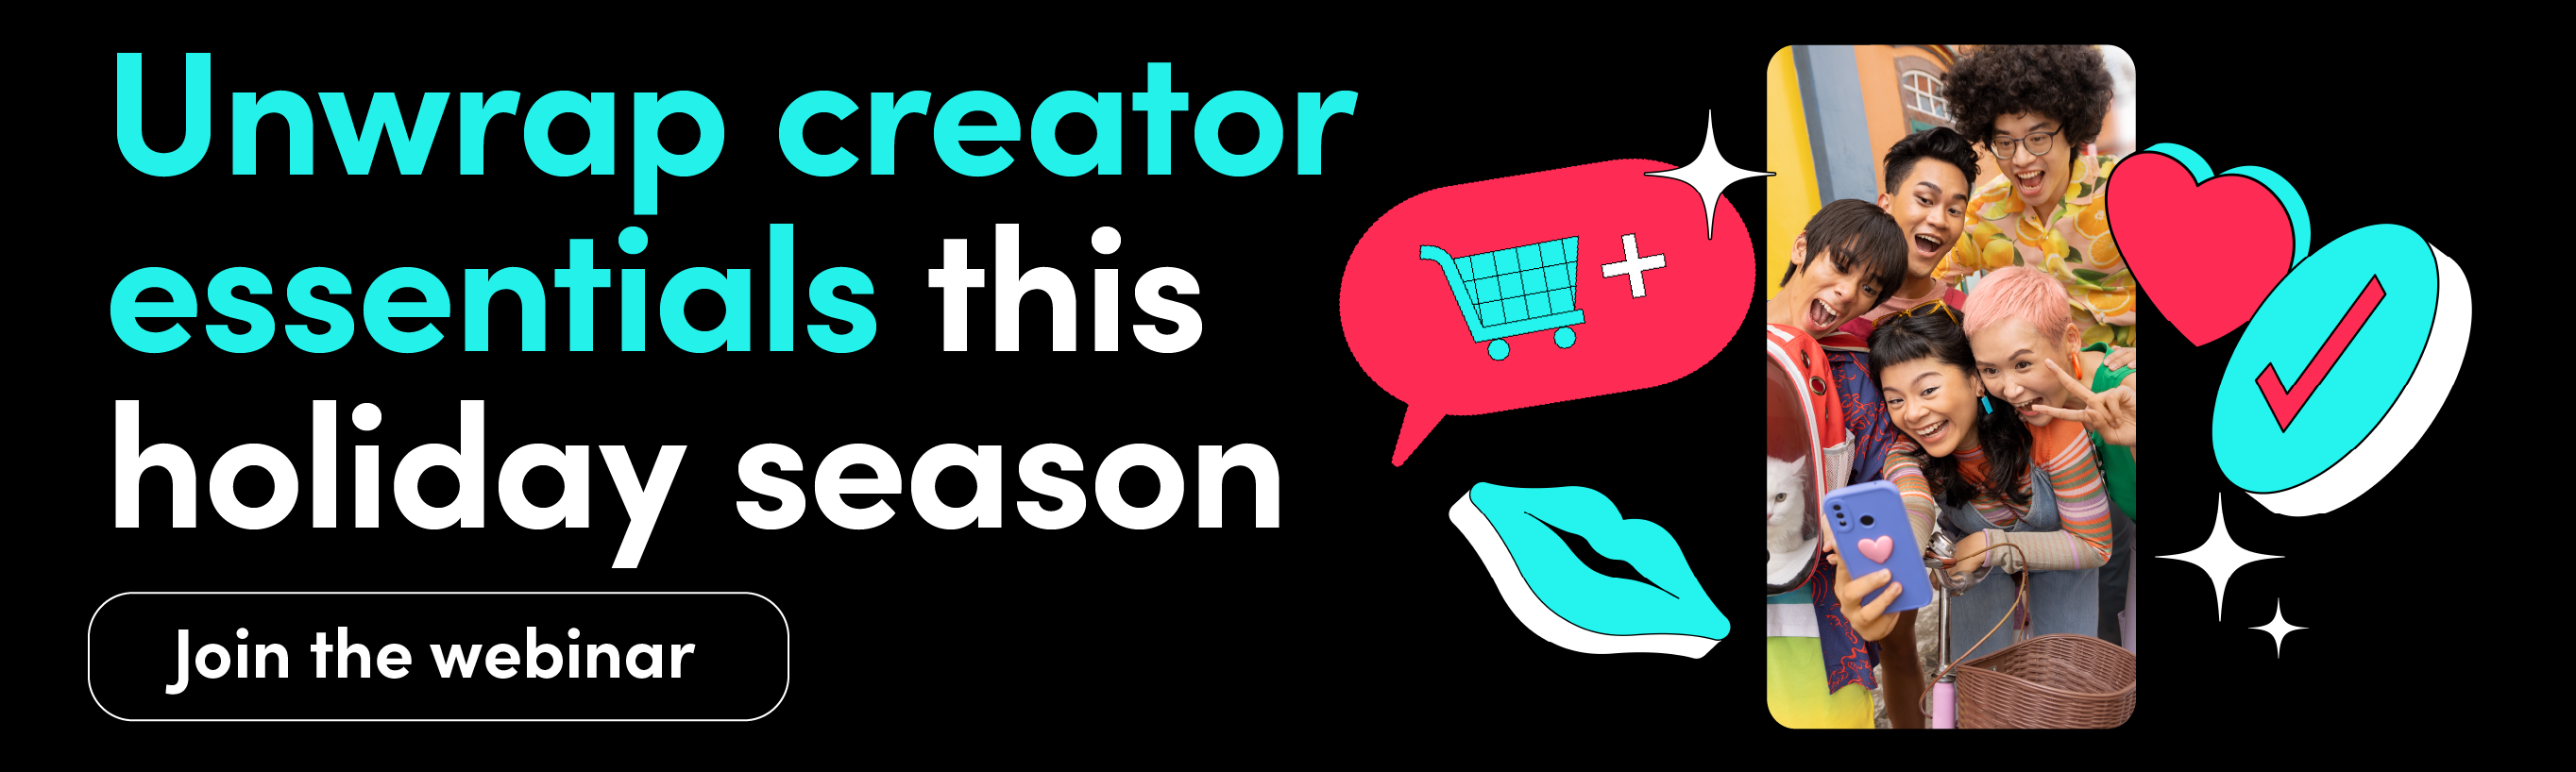 Unwrap Creator Essentials This Holiday Season Webinar